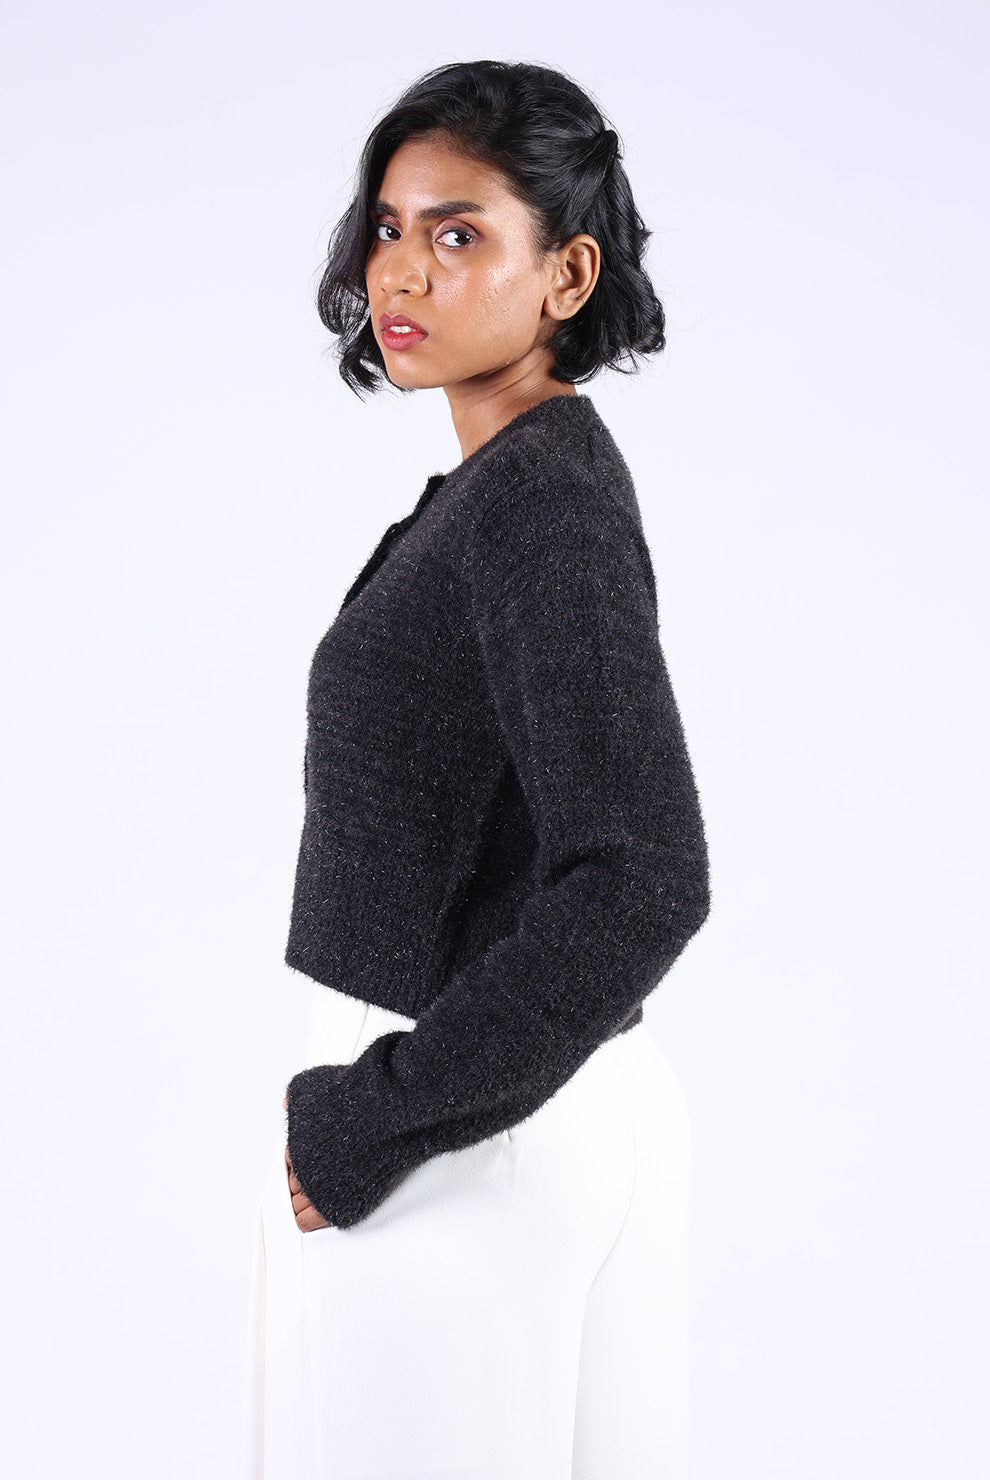 Black Cotton Wool Heart Button Sweater